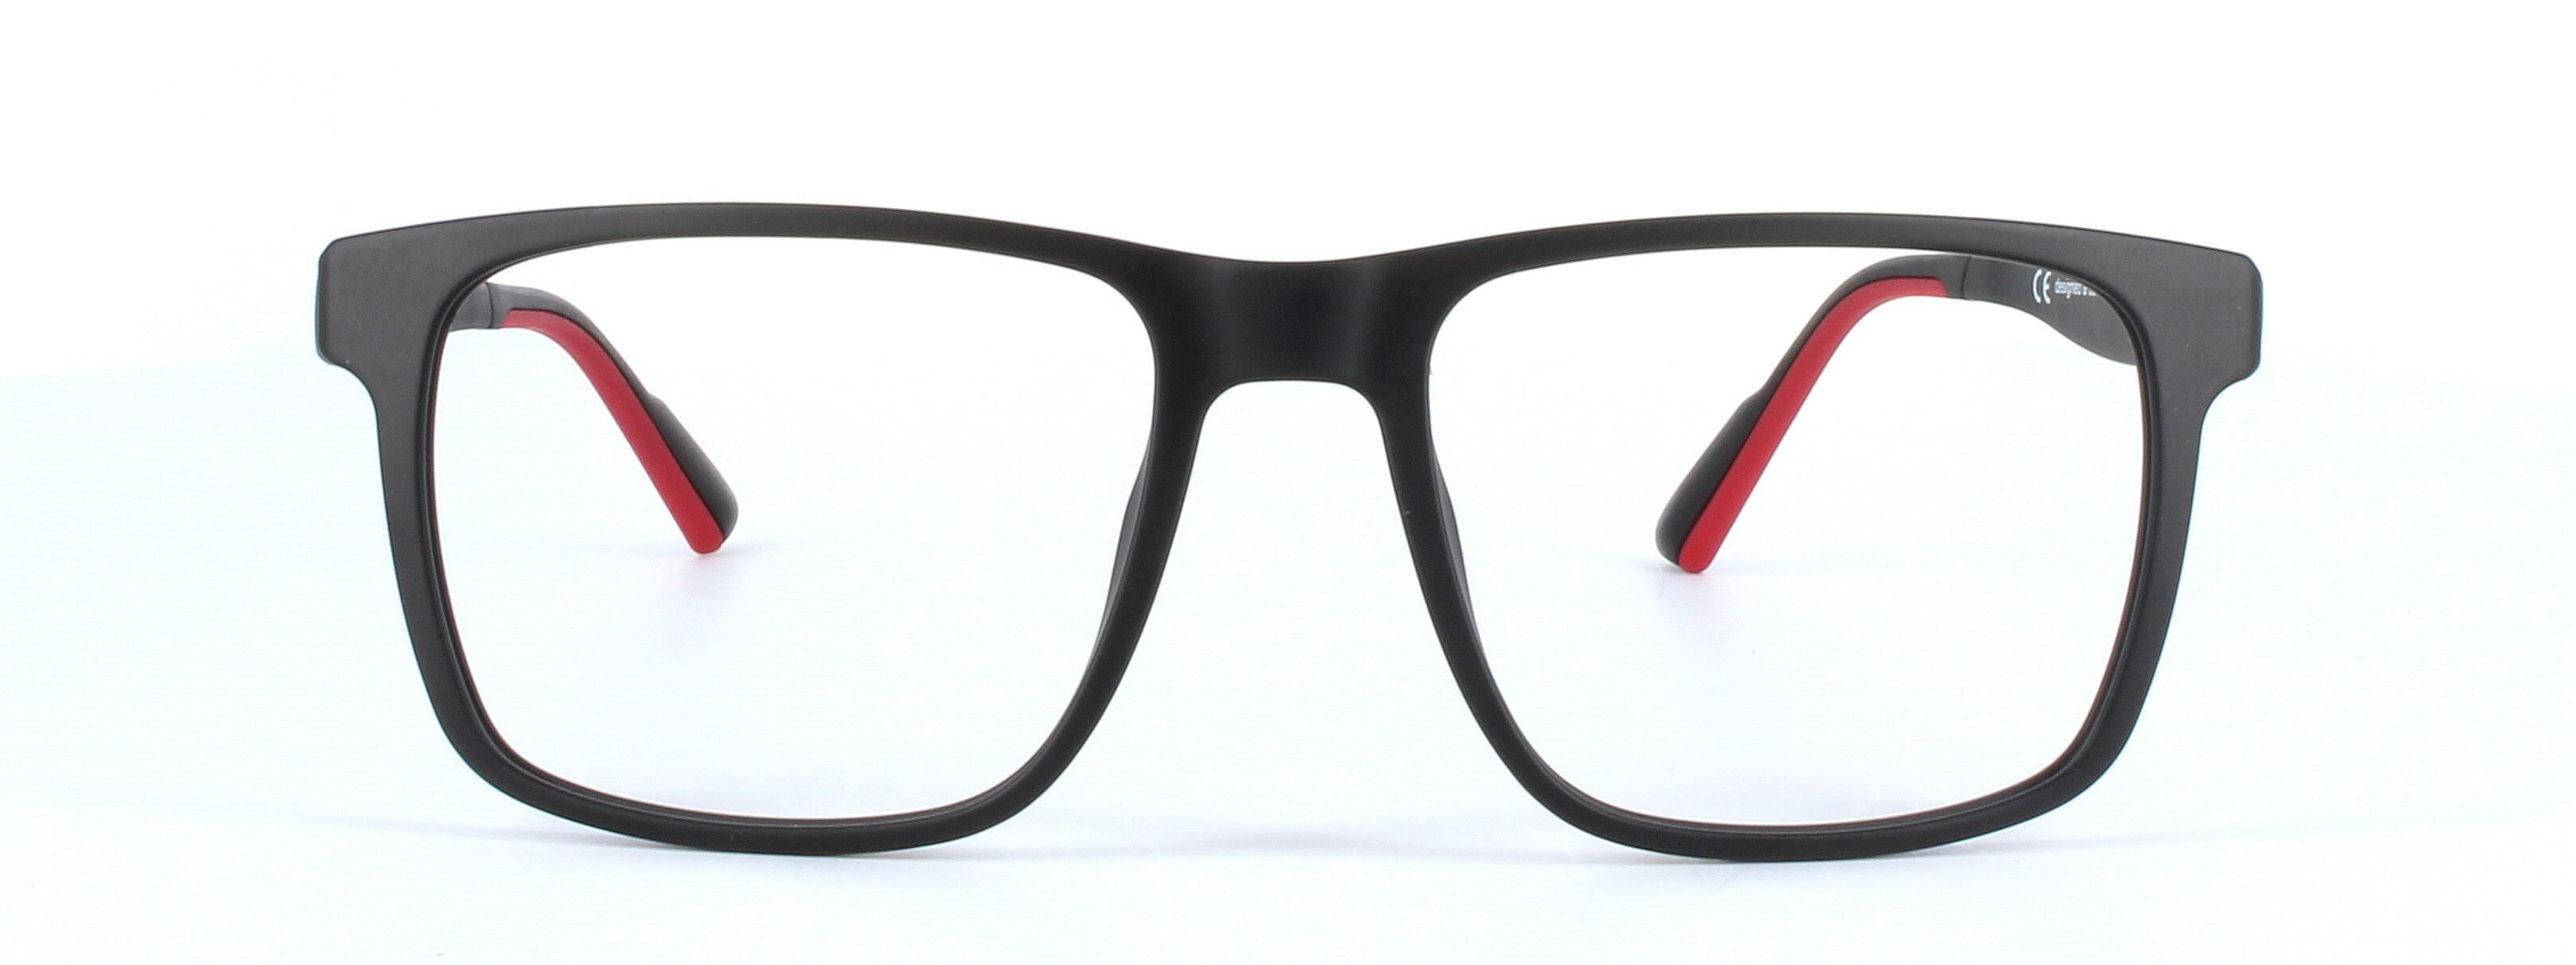 Helly Hansen 1064 - Lightweight (TR90 material) black gents full rim glasses - image view 5